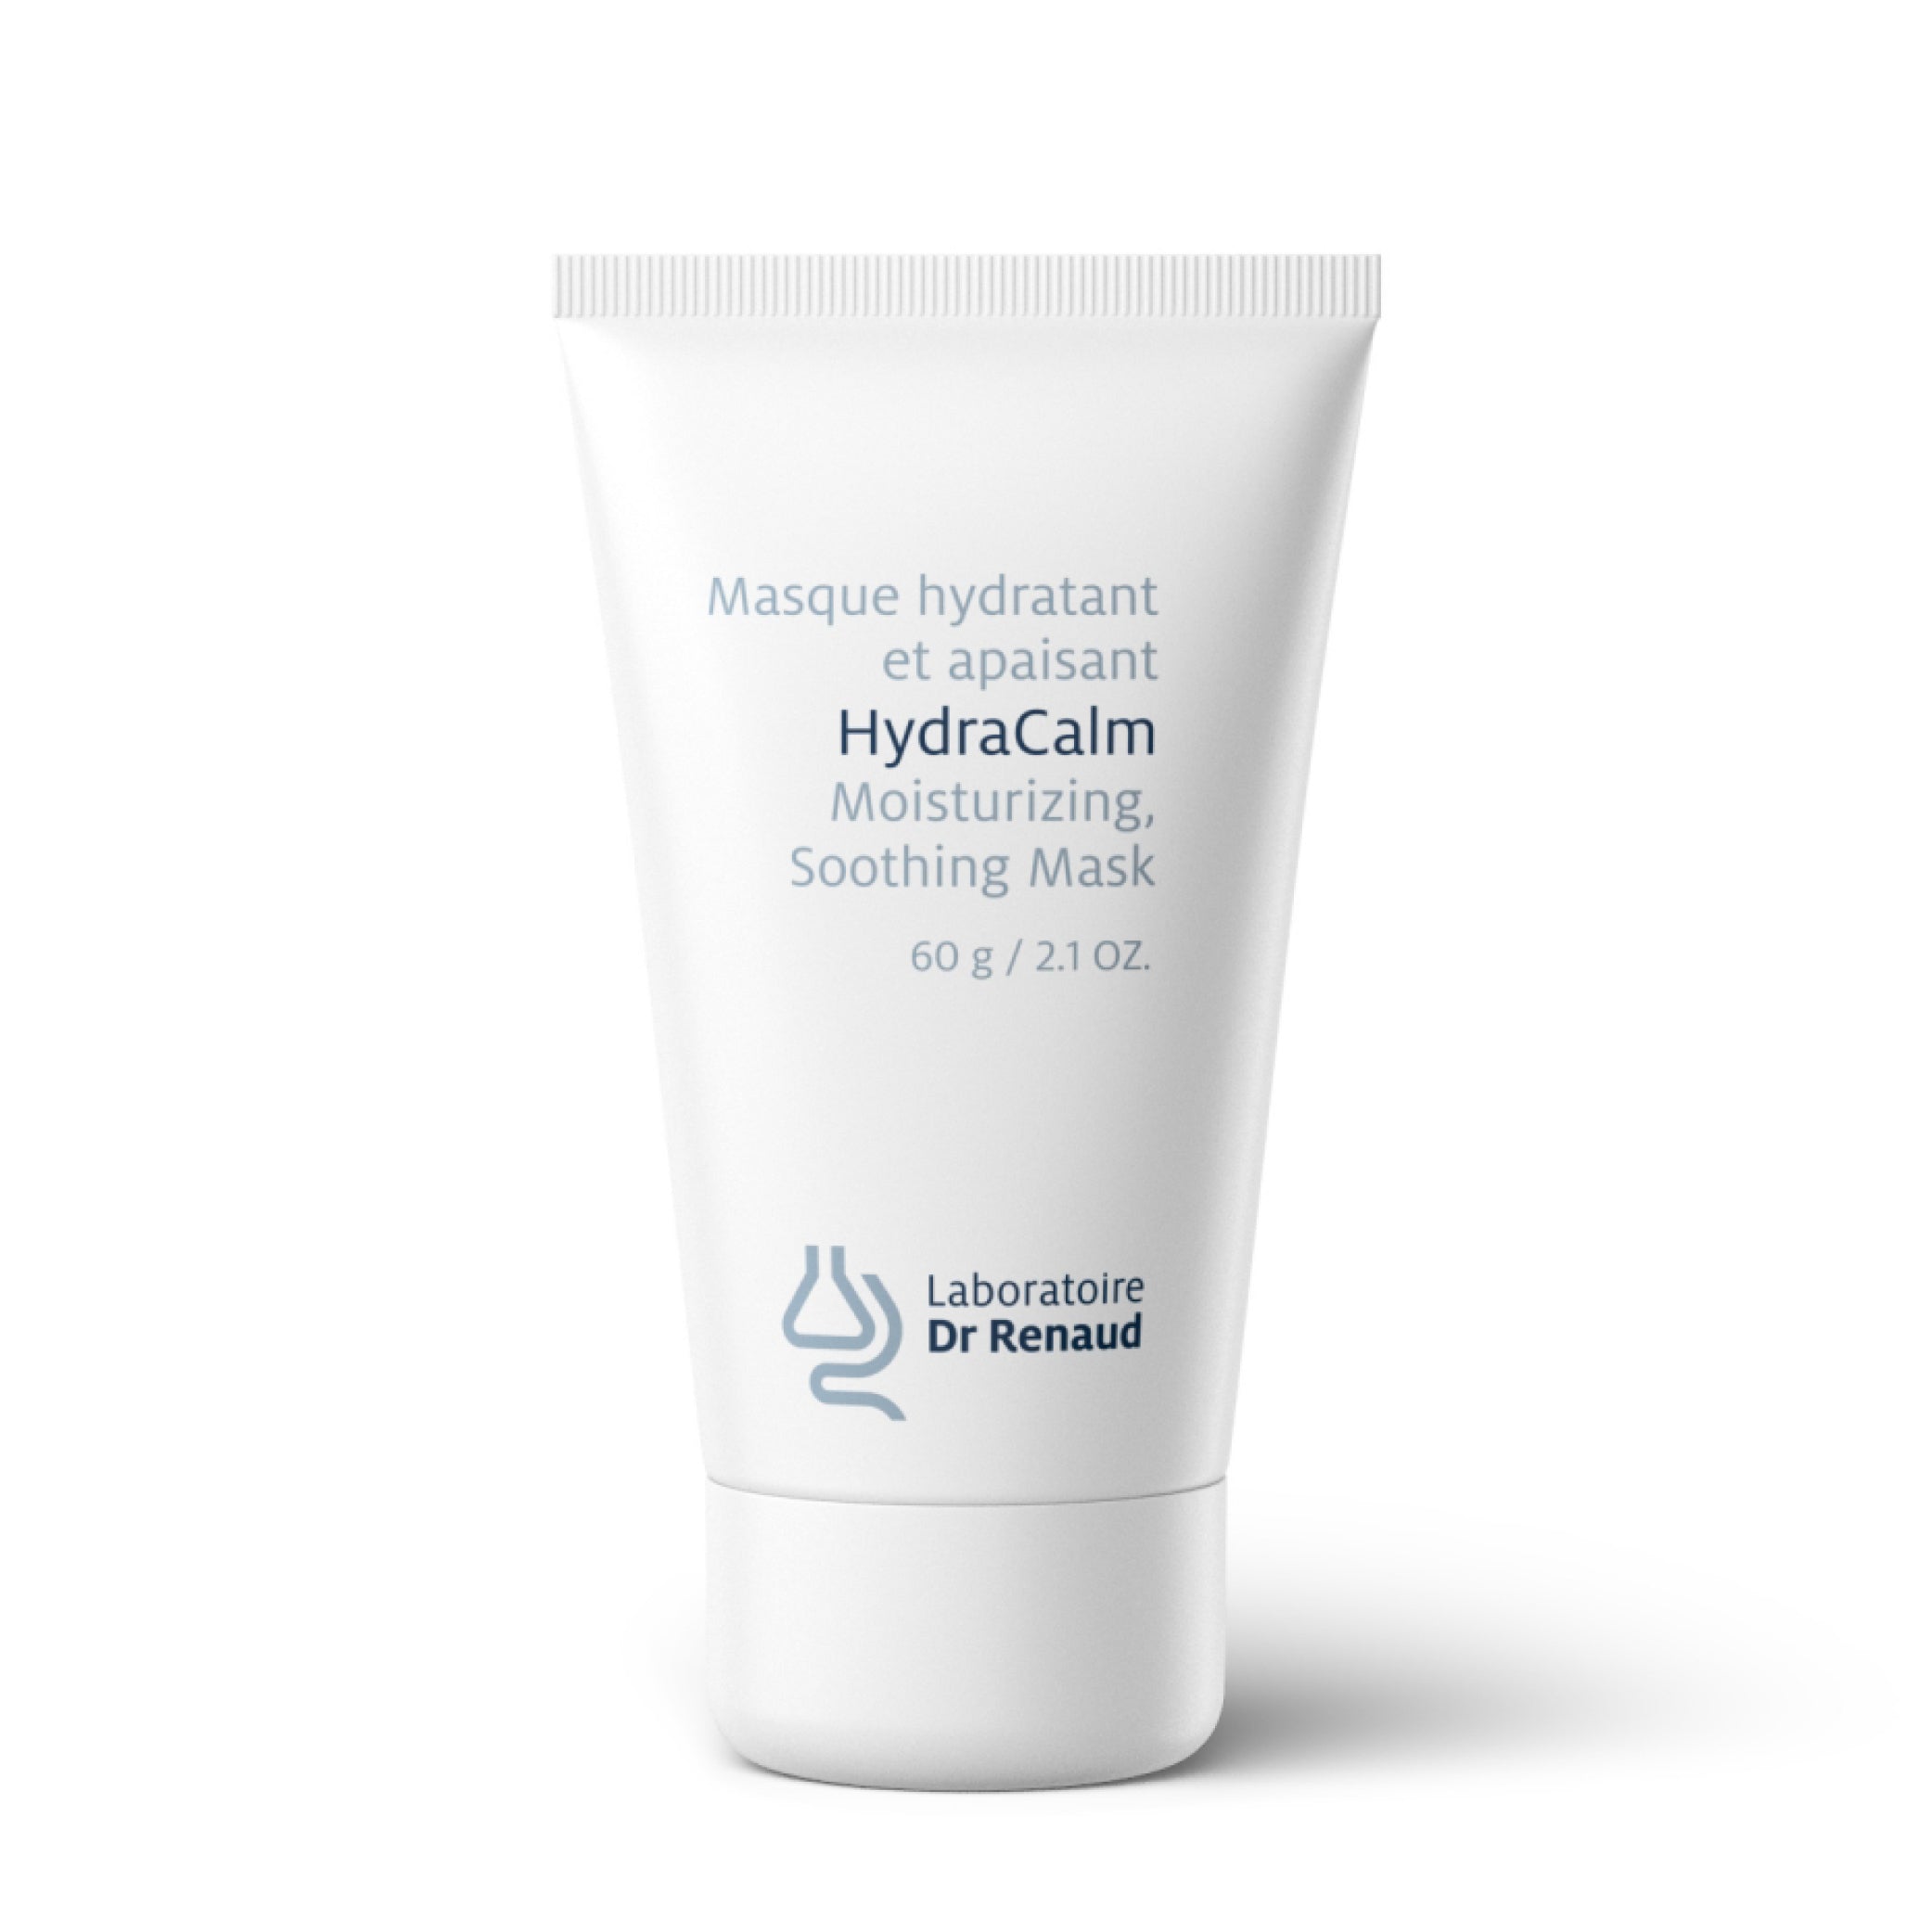 HydraCalm - Masque hydratant et apaisant